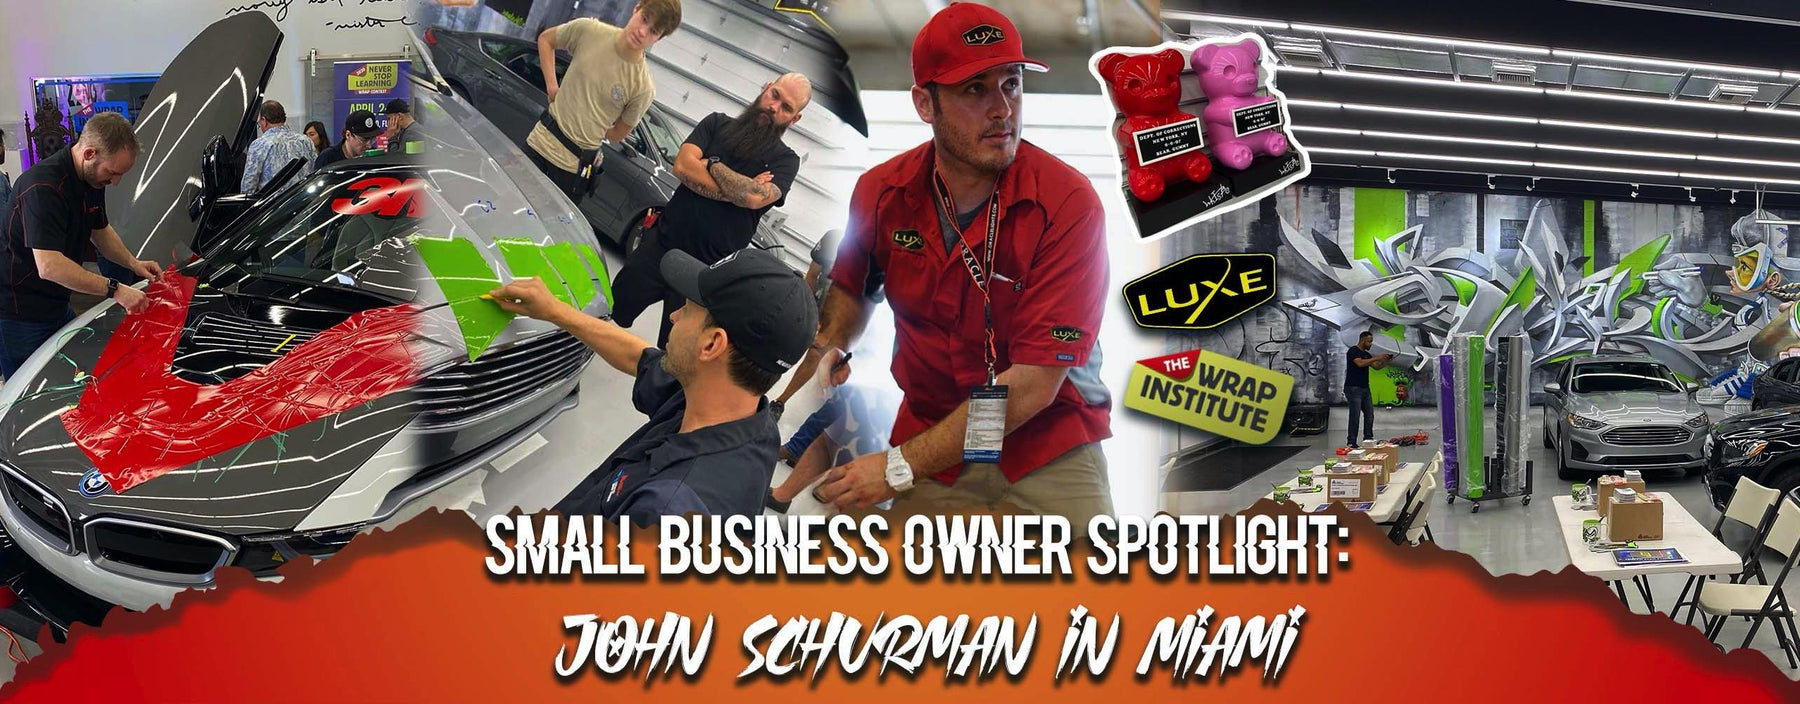 Small Business Owner Spotlight: John Schurman in Miami - Luxe Auto Concepts